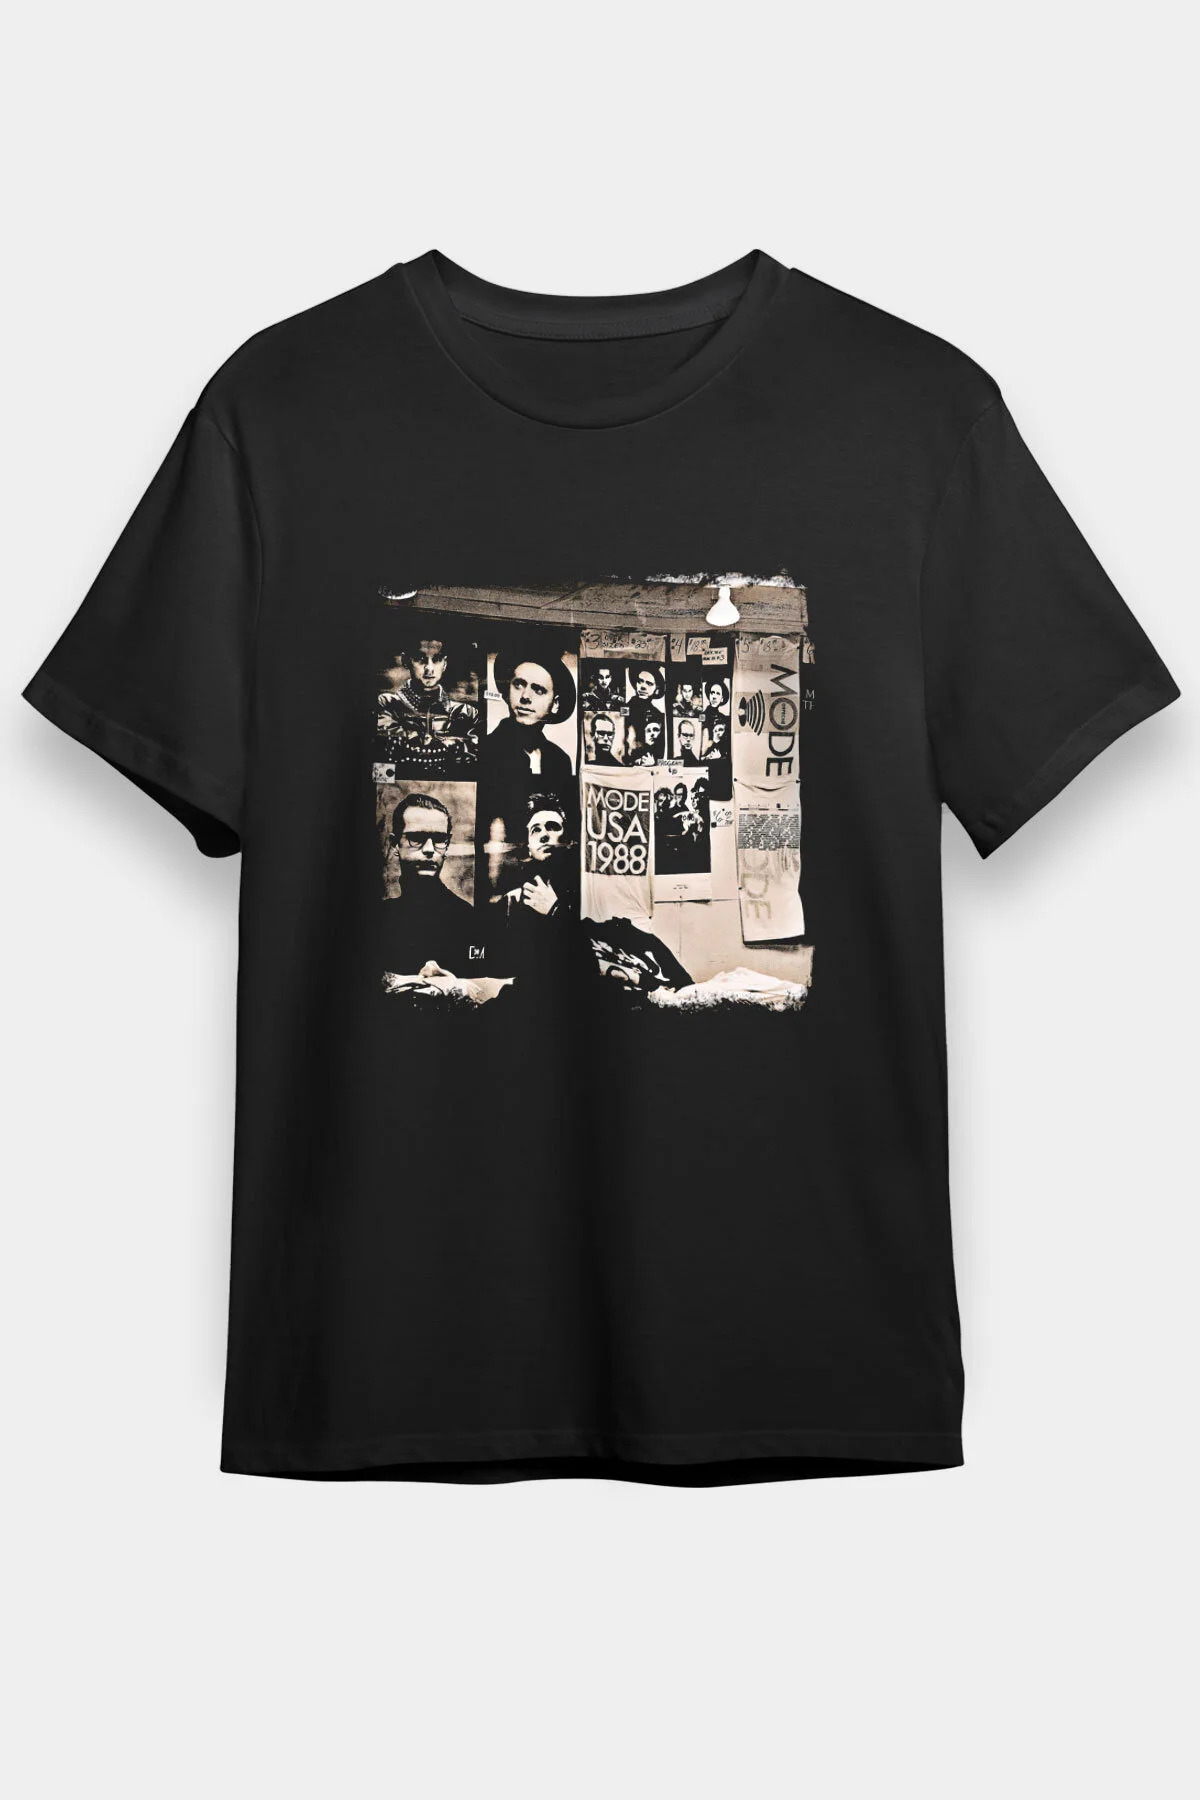 Depeche Mode T shirt , Music Band ,Unisex Tshirt 19/